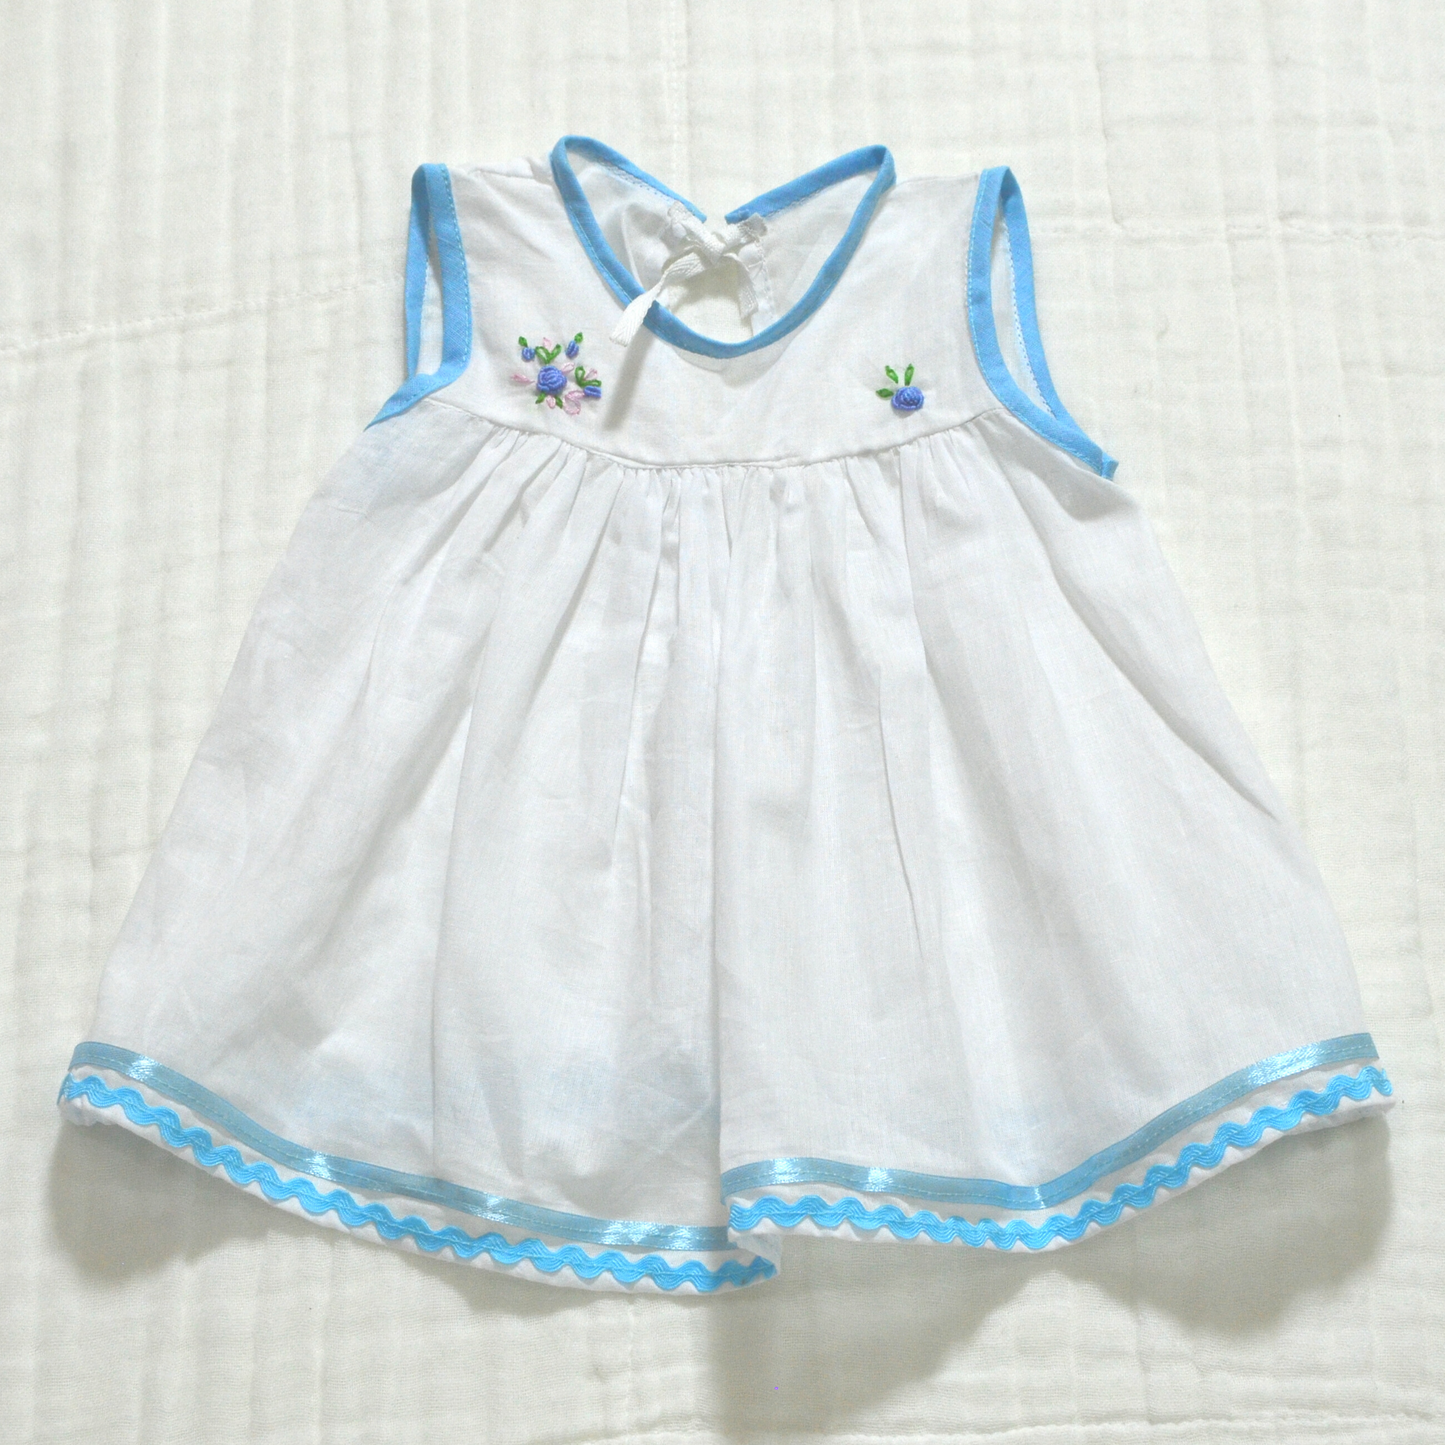 Handmade Baby Dress - Muslin 0 to 3 month